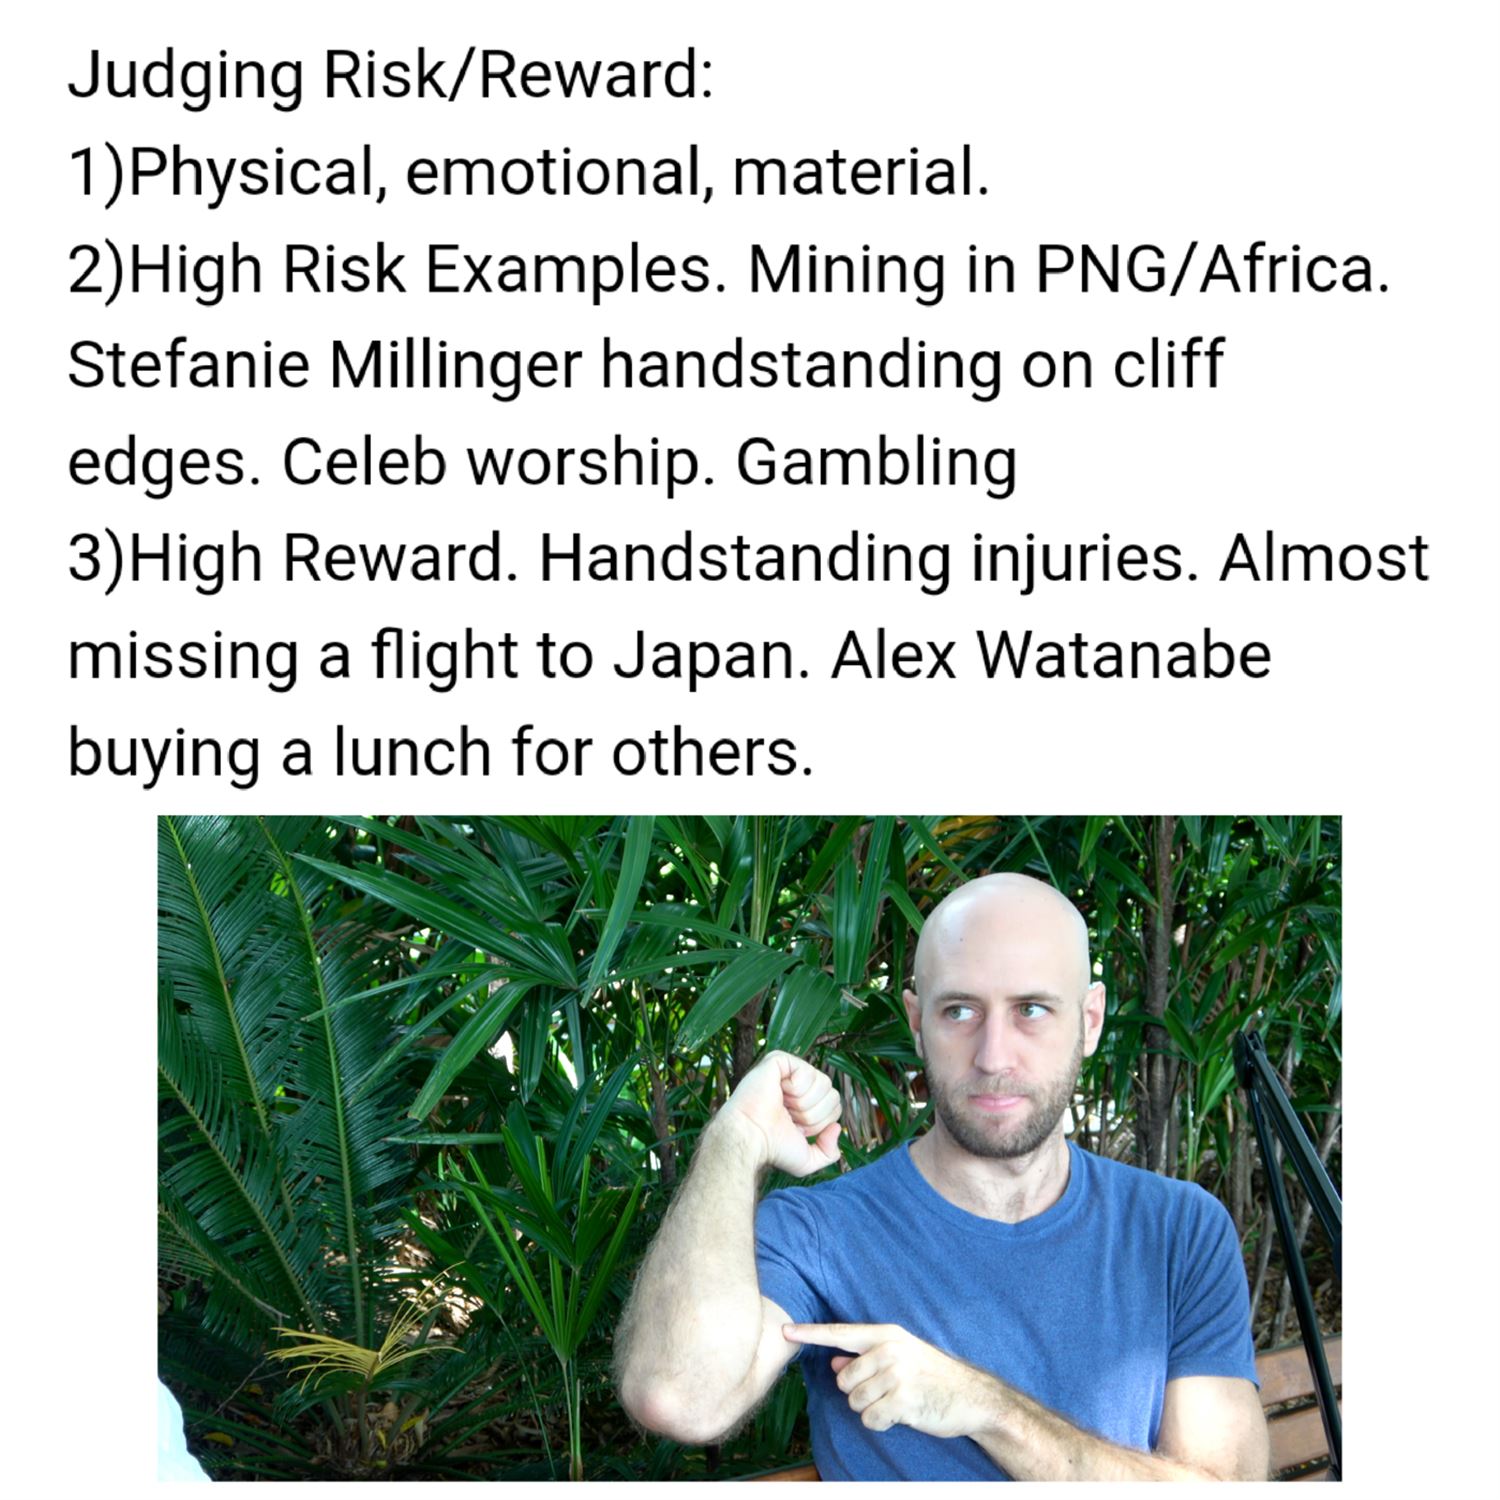 High reward examples